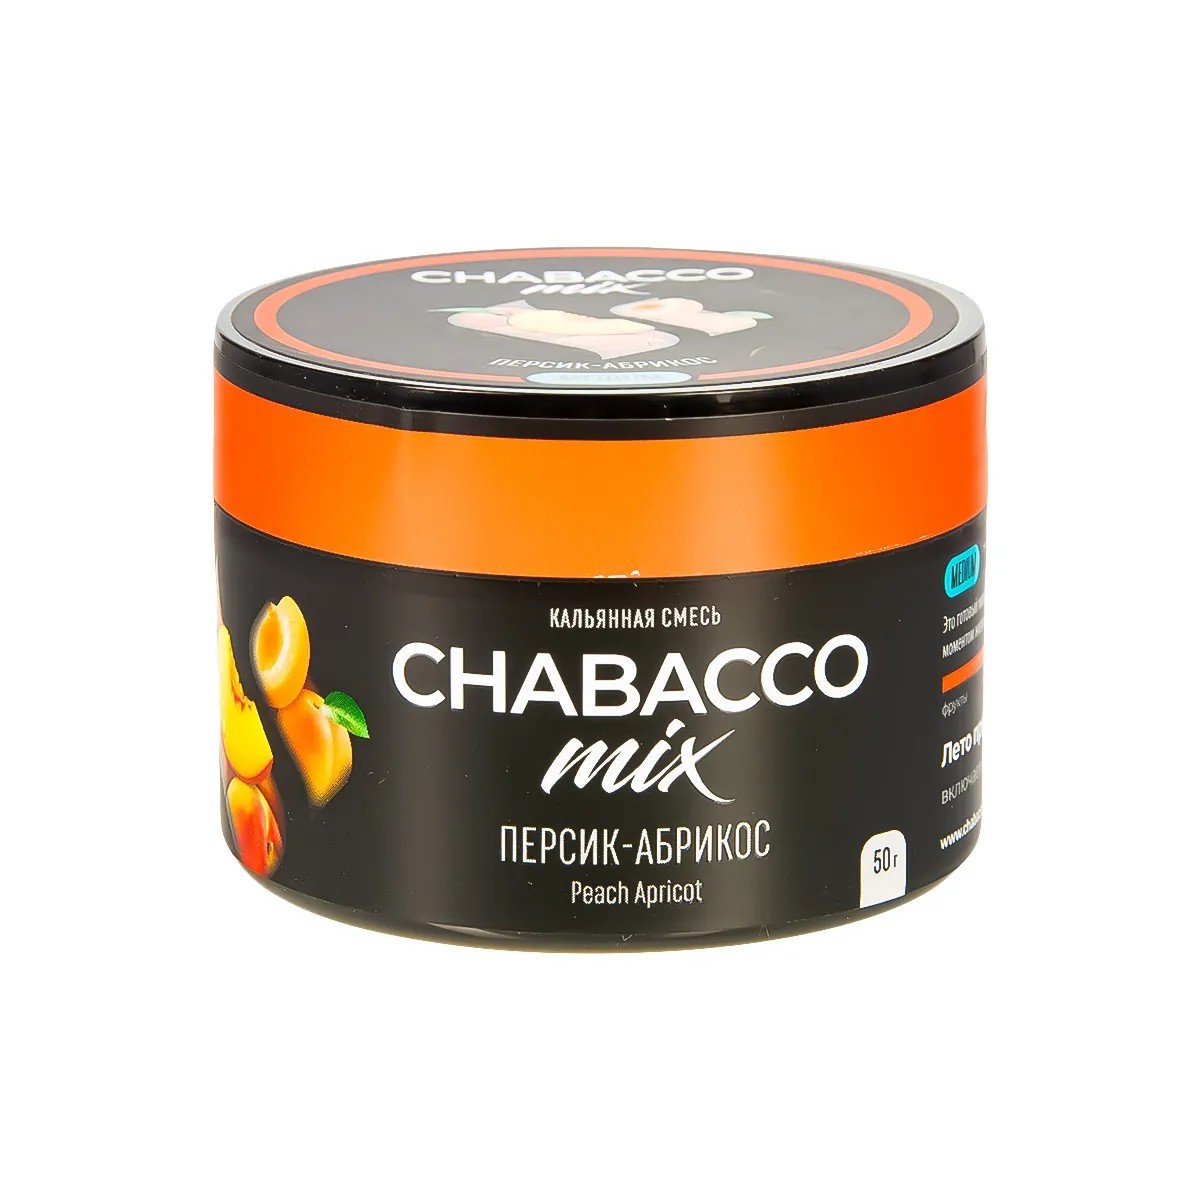 (M) Chabacco Mix 50 г Peach Apricot (Персик-абрикос)